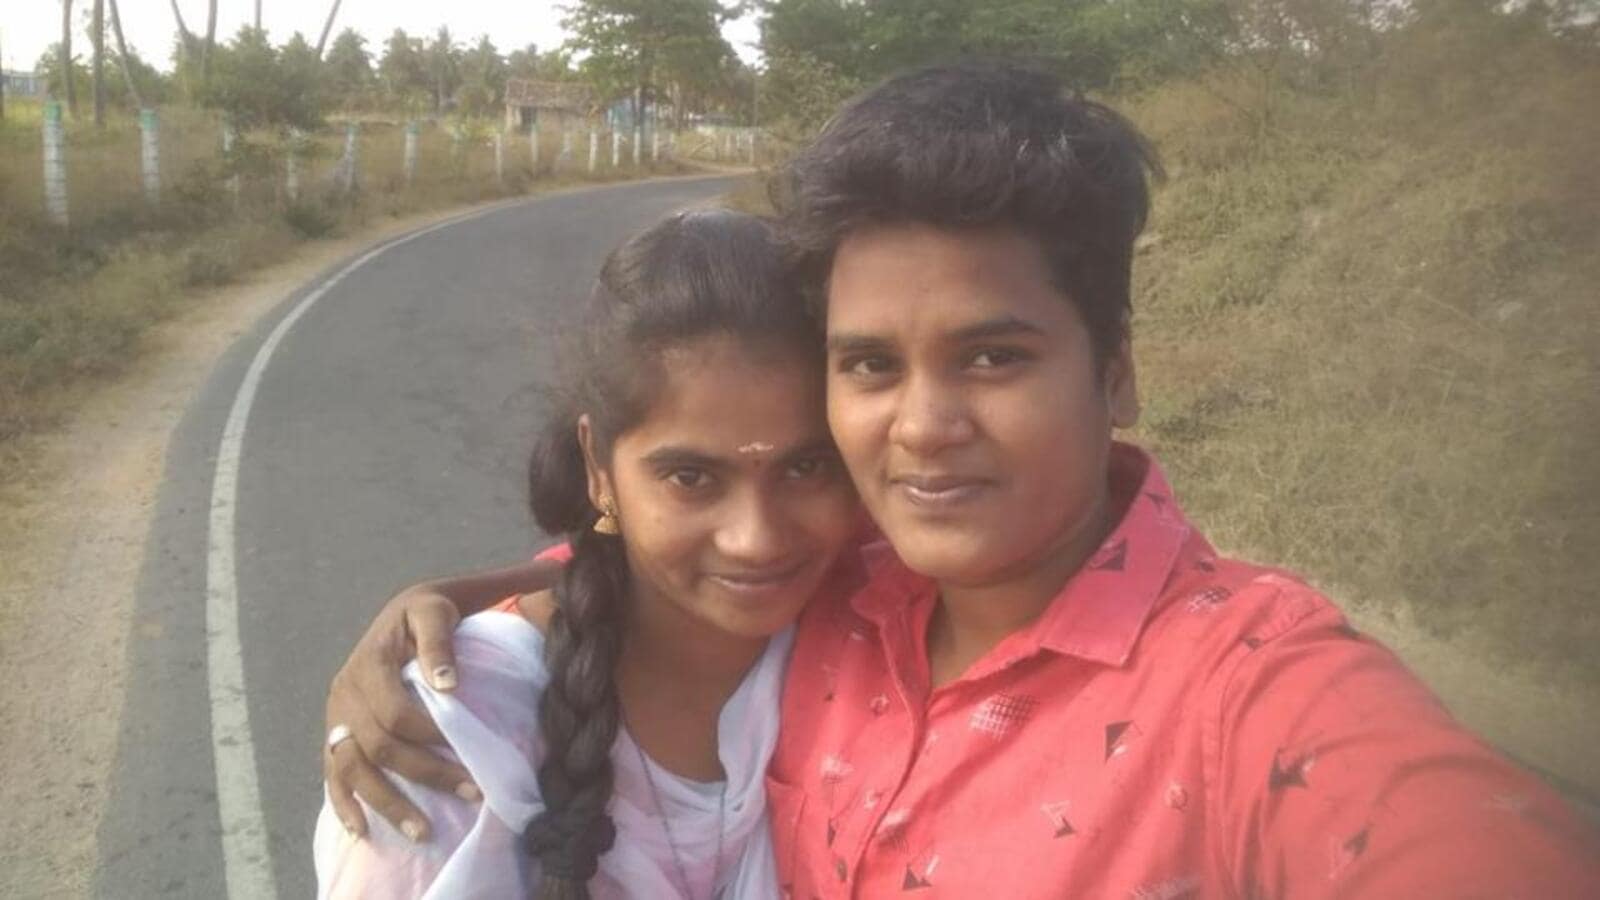 Kerala Teen Lesbian - A year after landmark HC ruling, lesbian couples still face discrimination  | Latest News India - Hindustan Times